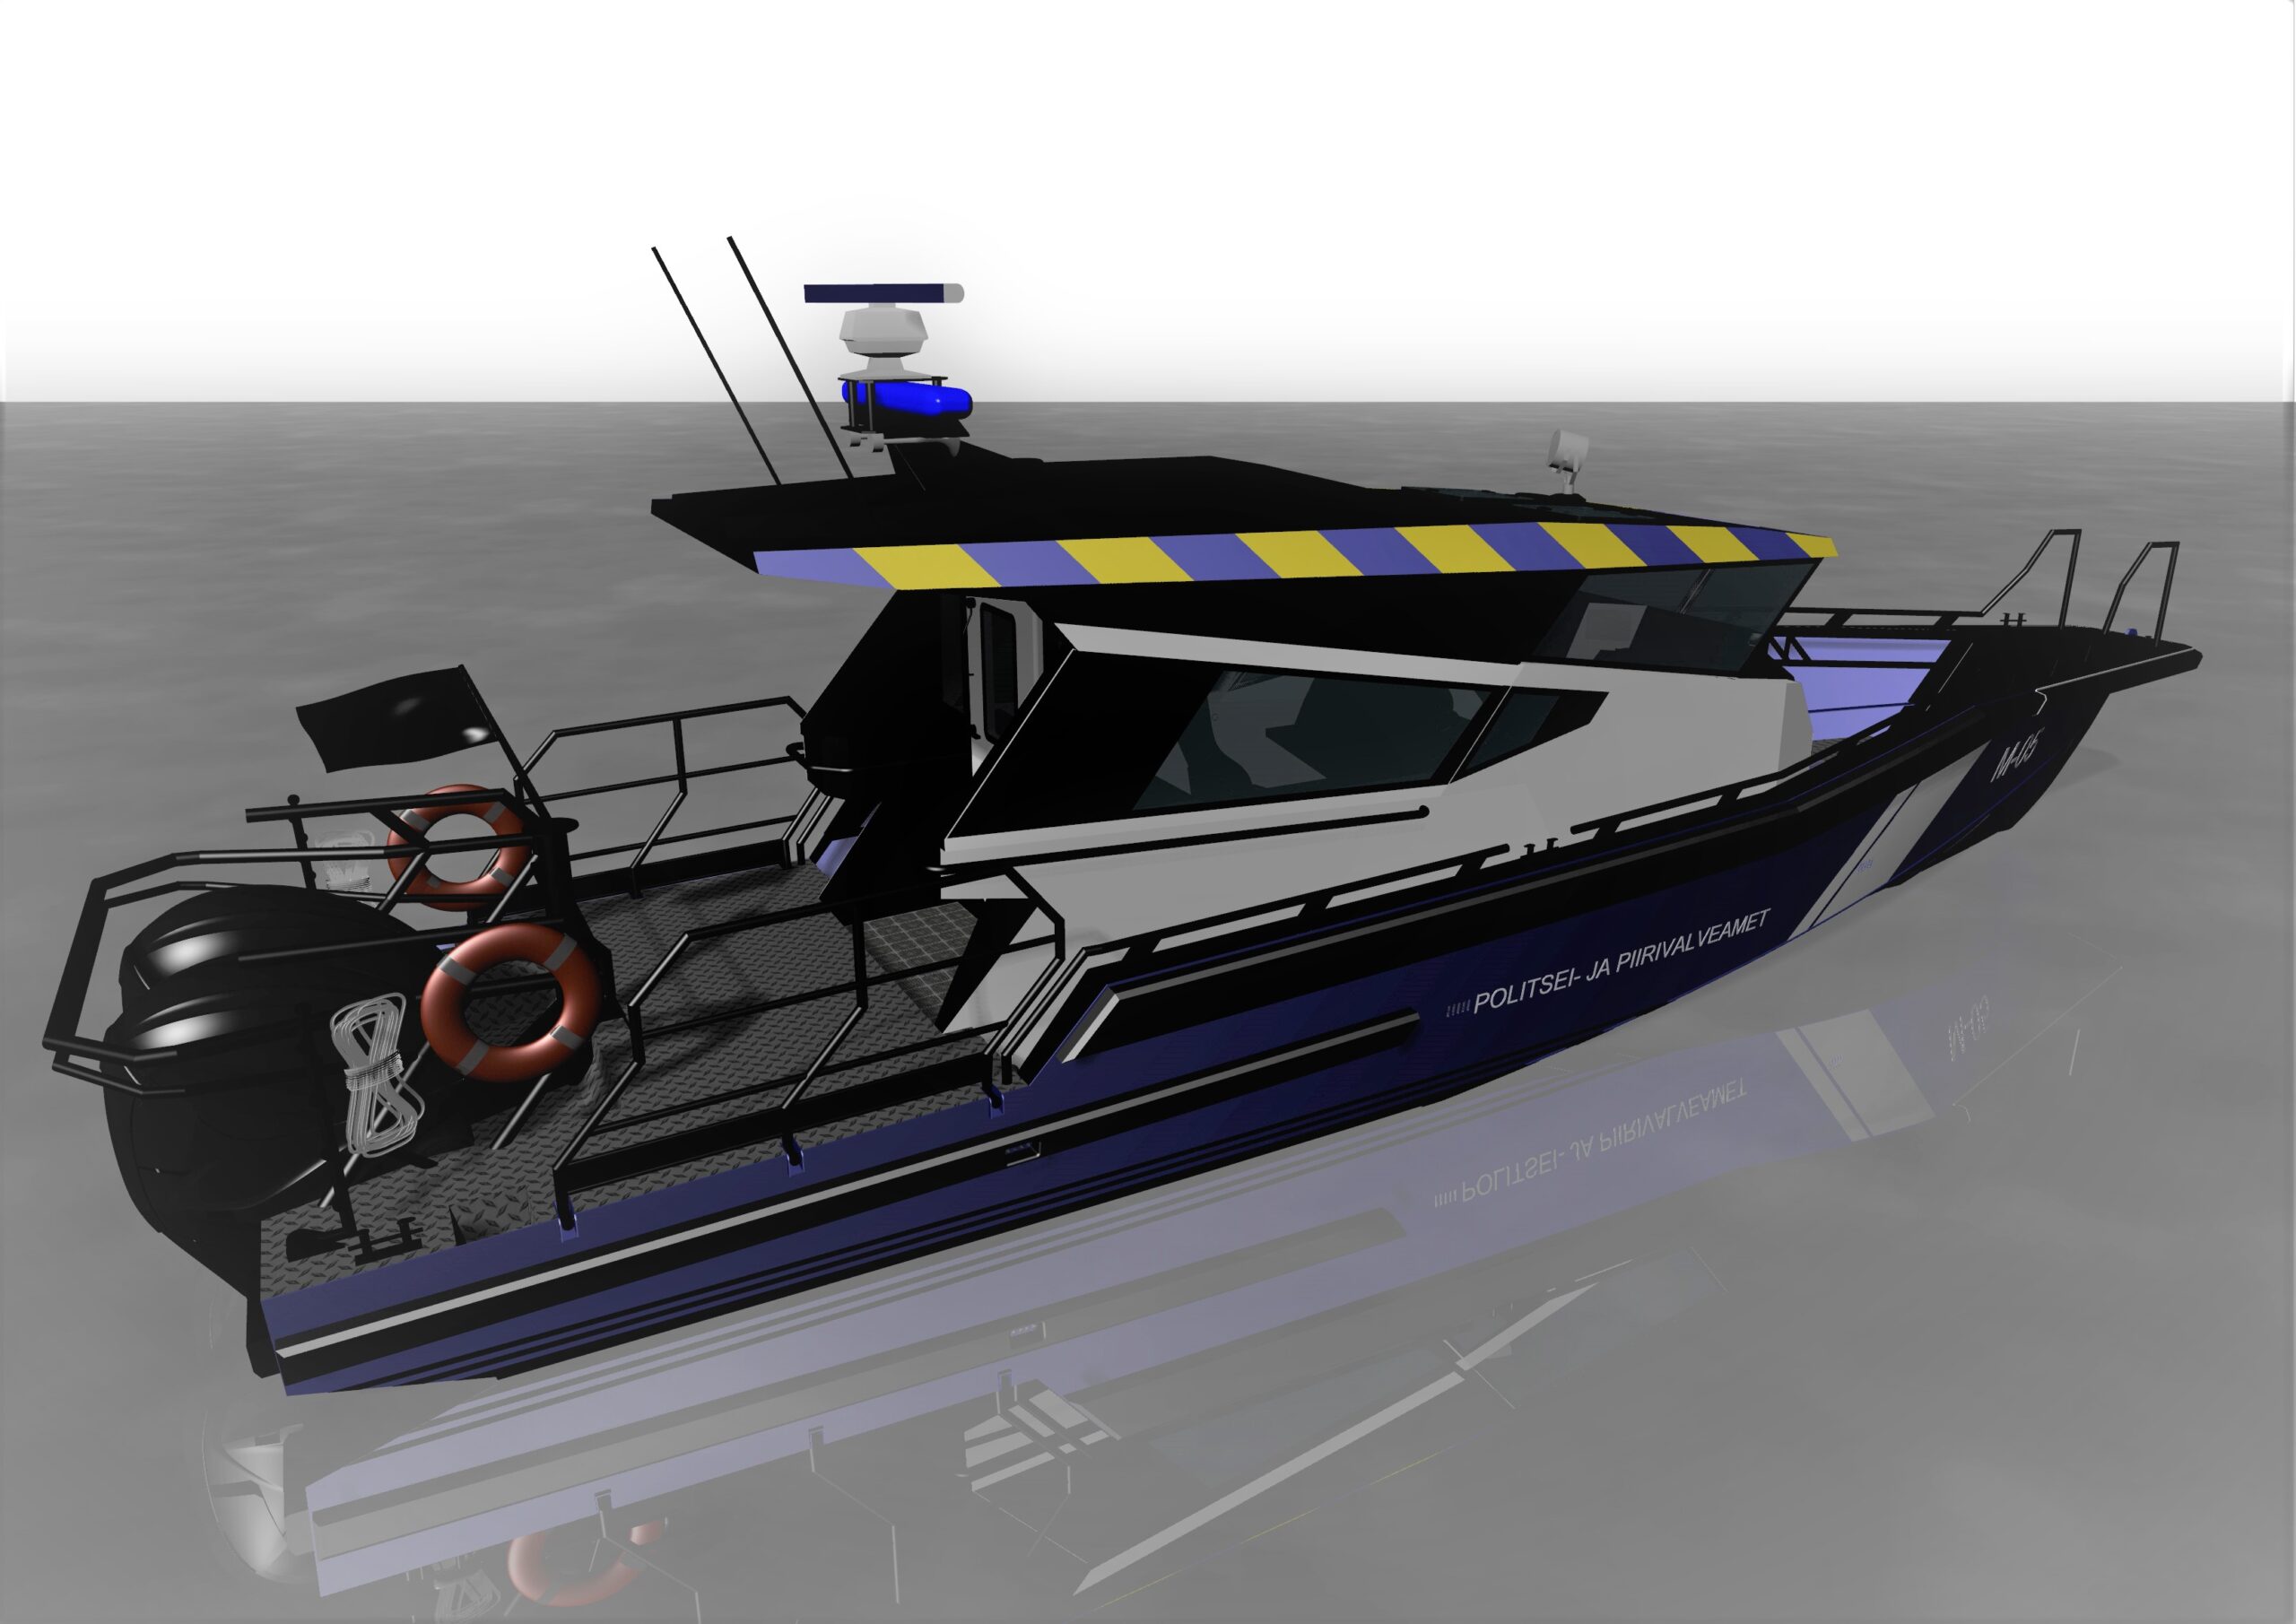 patrol boat, sar boat, law enforcement boat, professional aluminium boat, police boat, borderpatrol boat